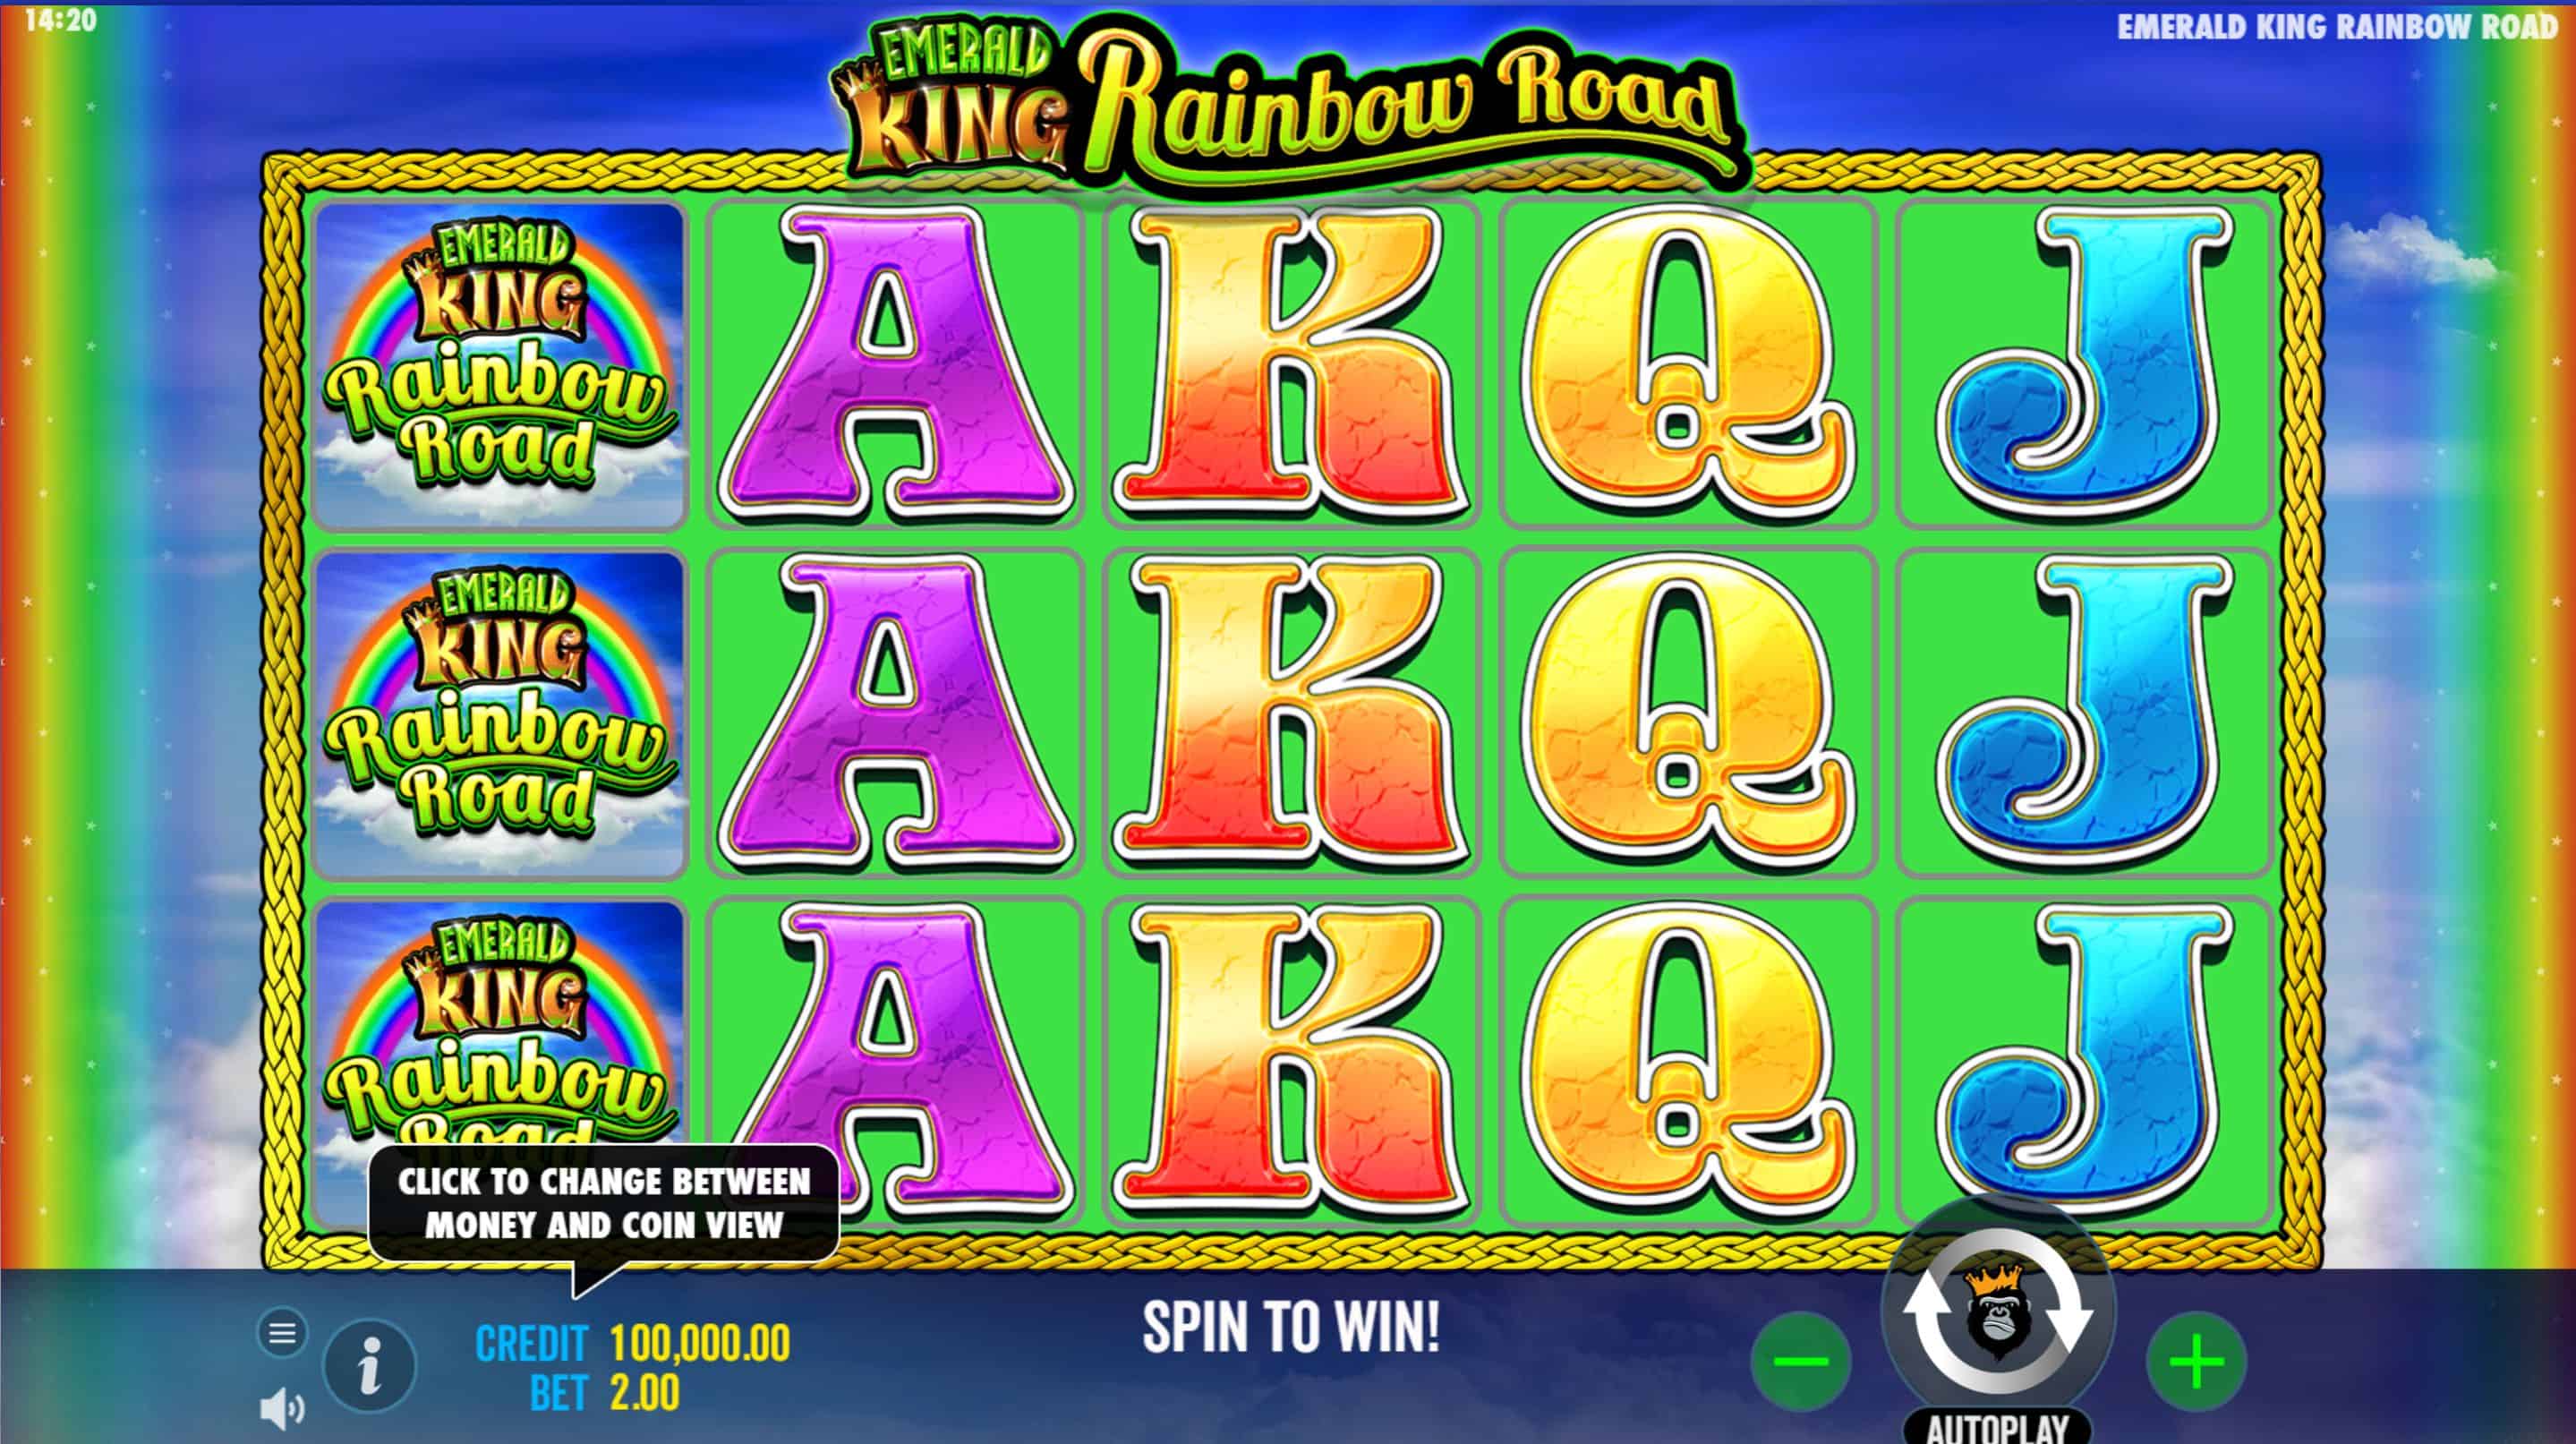 Emerald King Rainbow Road Slot Game Free Play at Casino Ireland 01